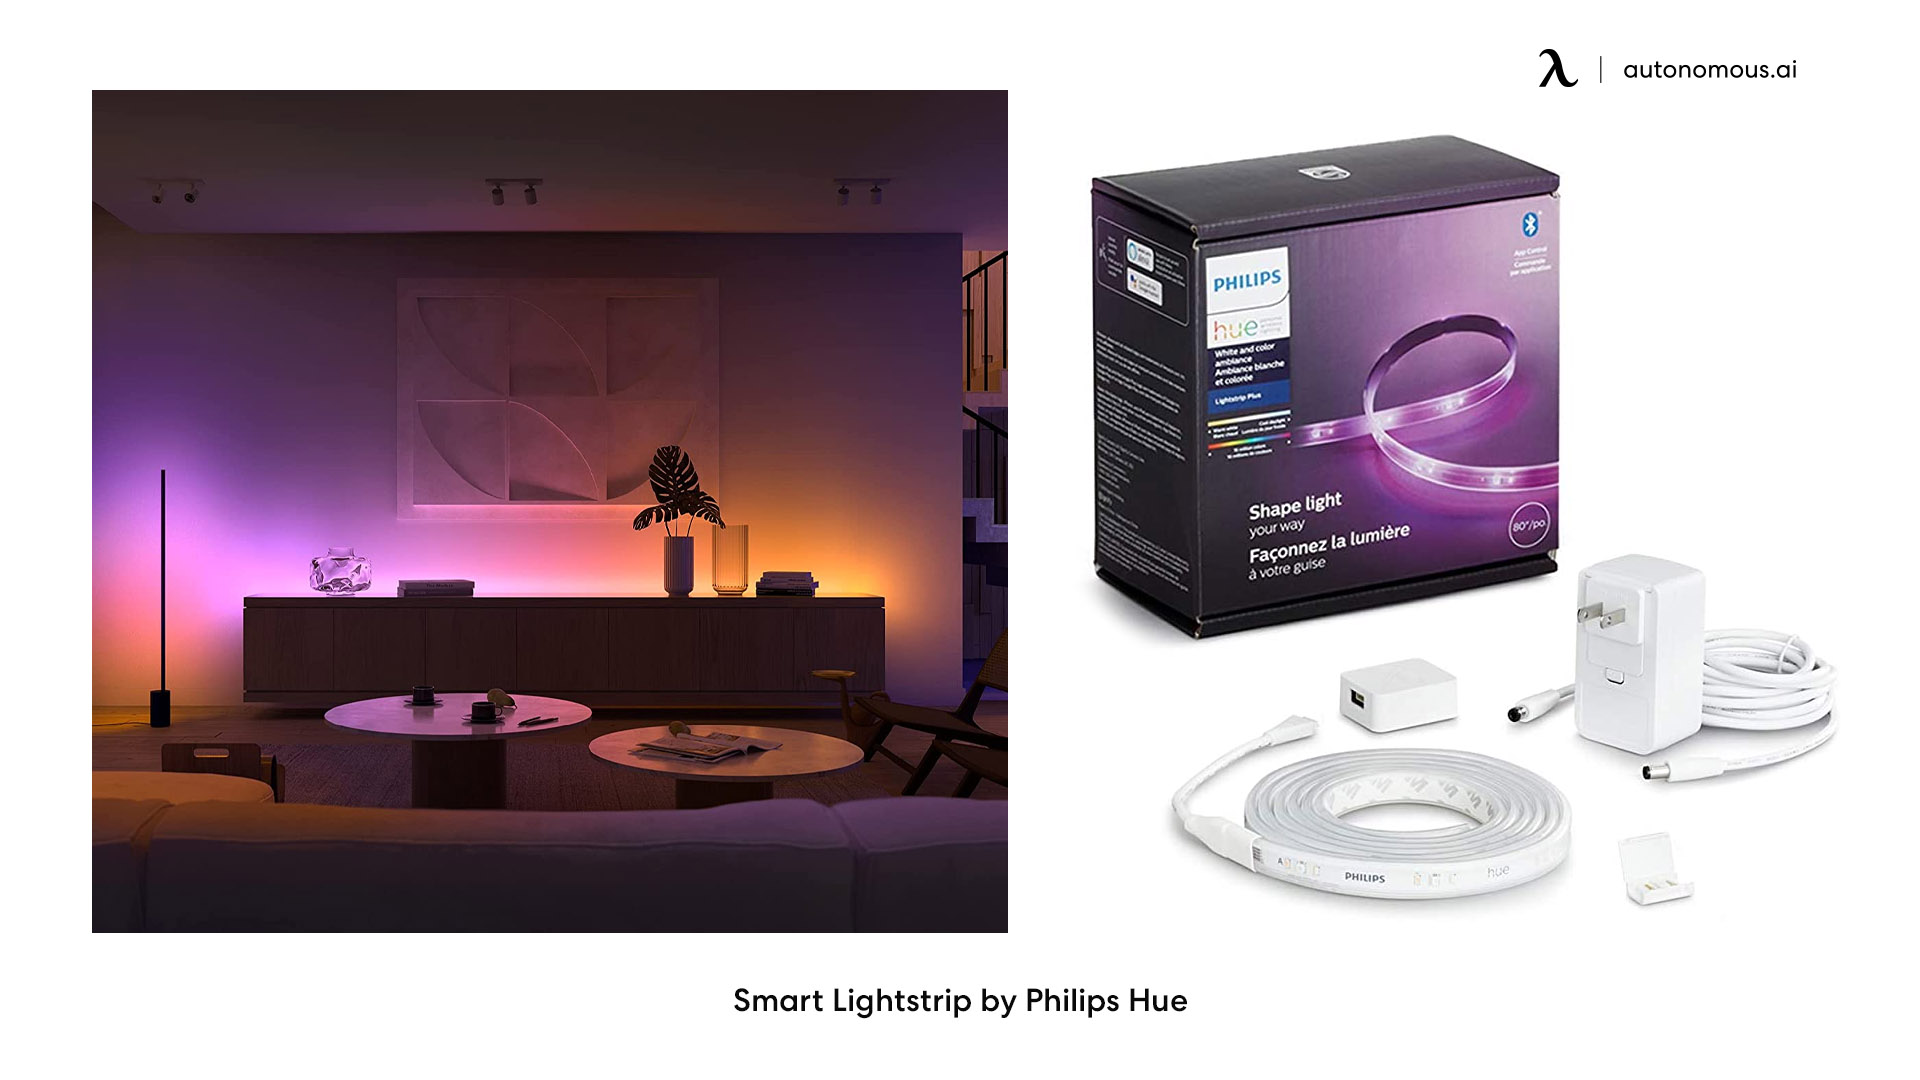 Smart Lightstrip by Philips Hue